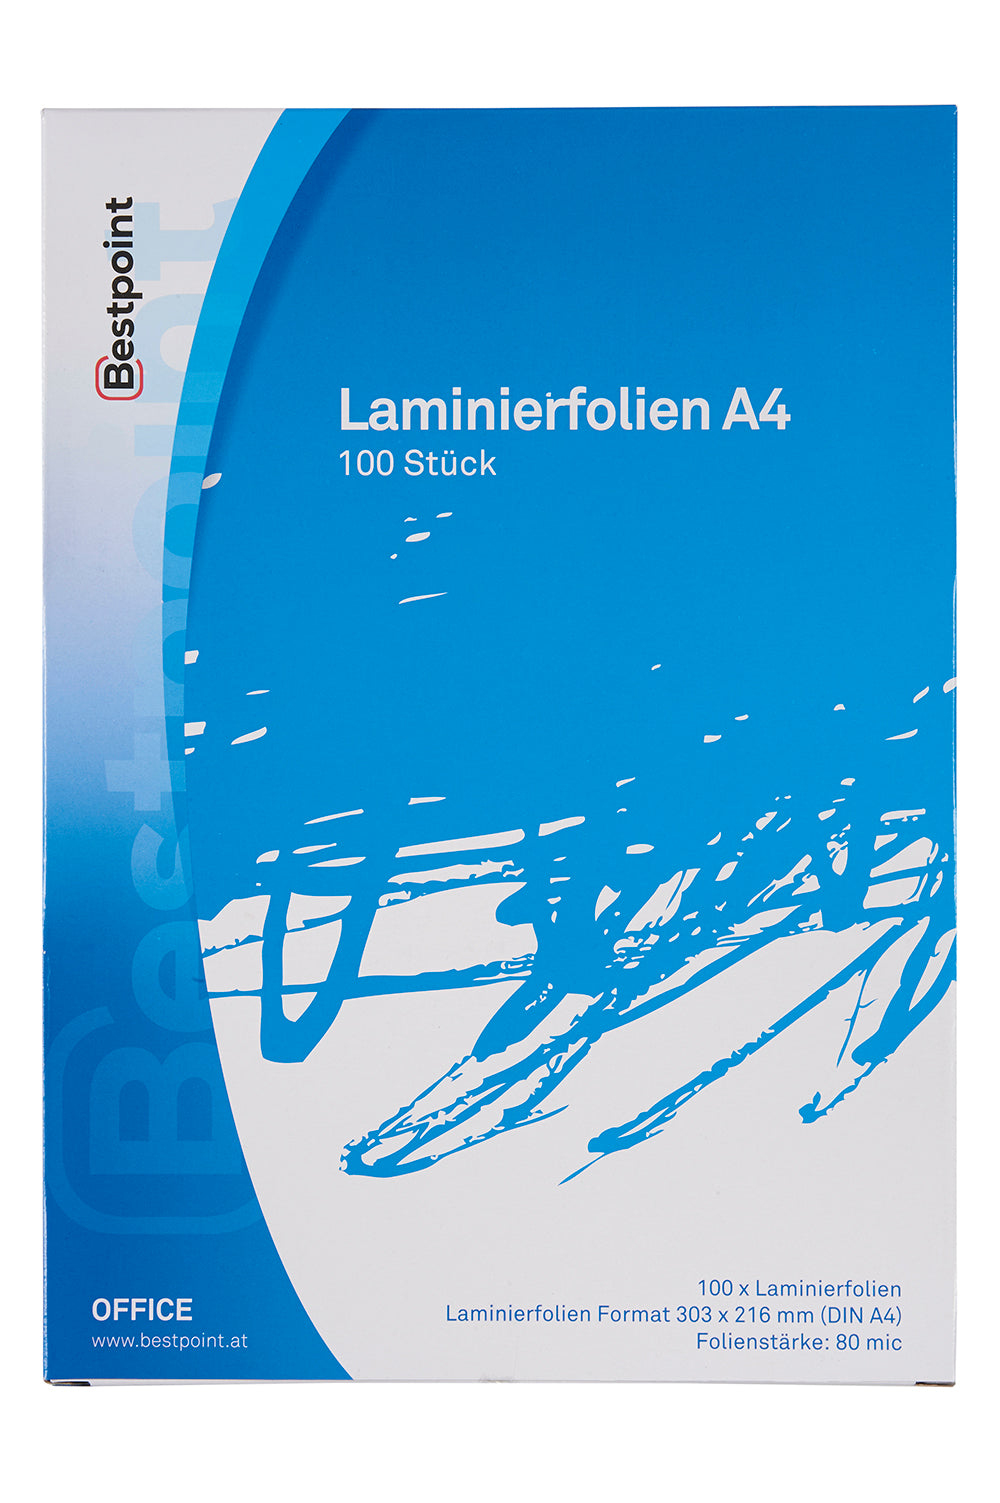 Laminierfolien A4, 100 Stk/Pkg. – PSM Bestpoint